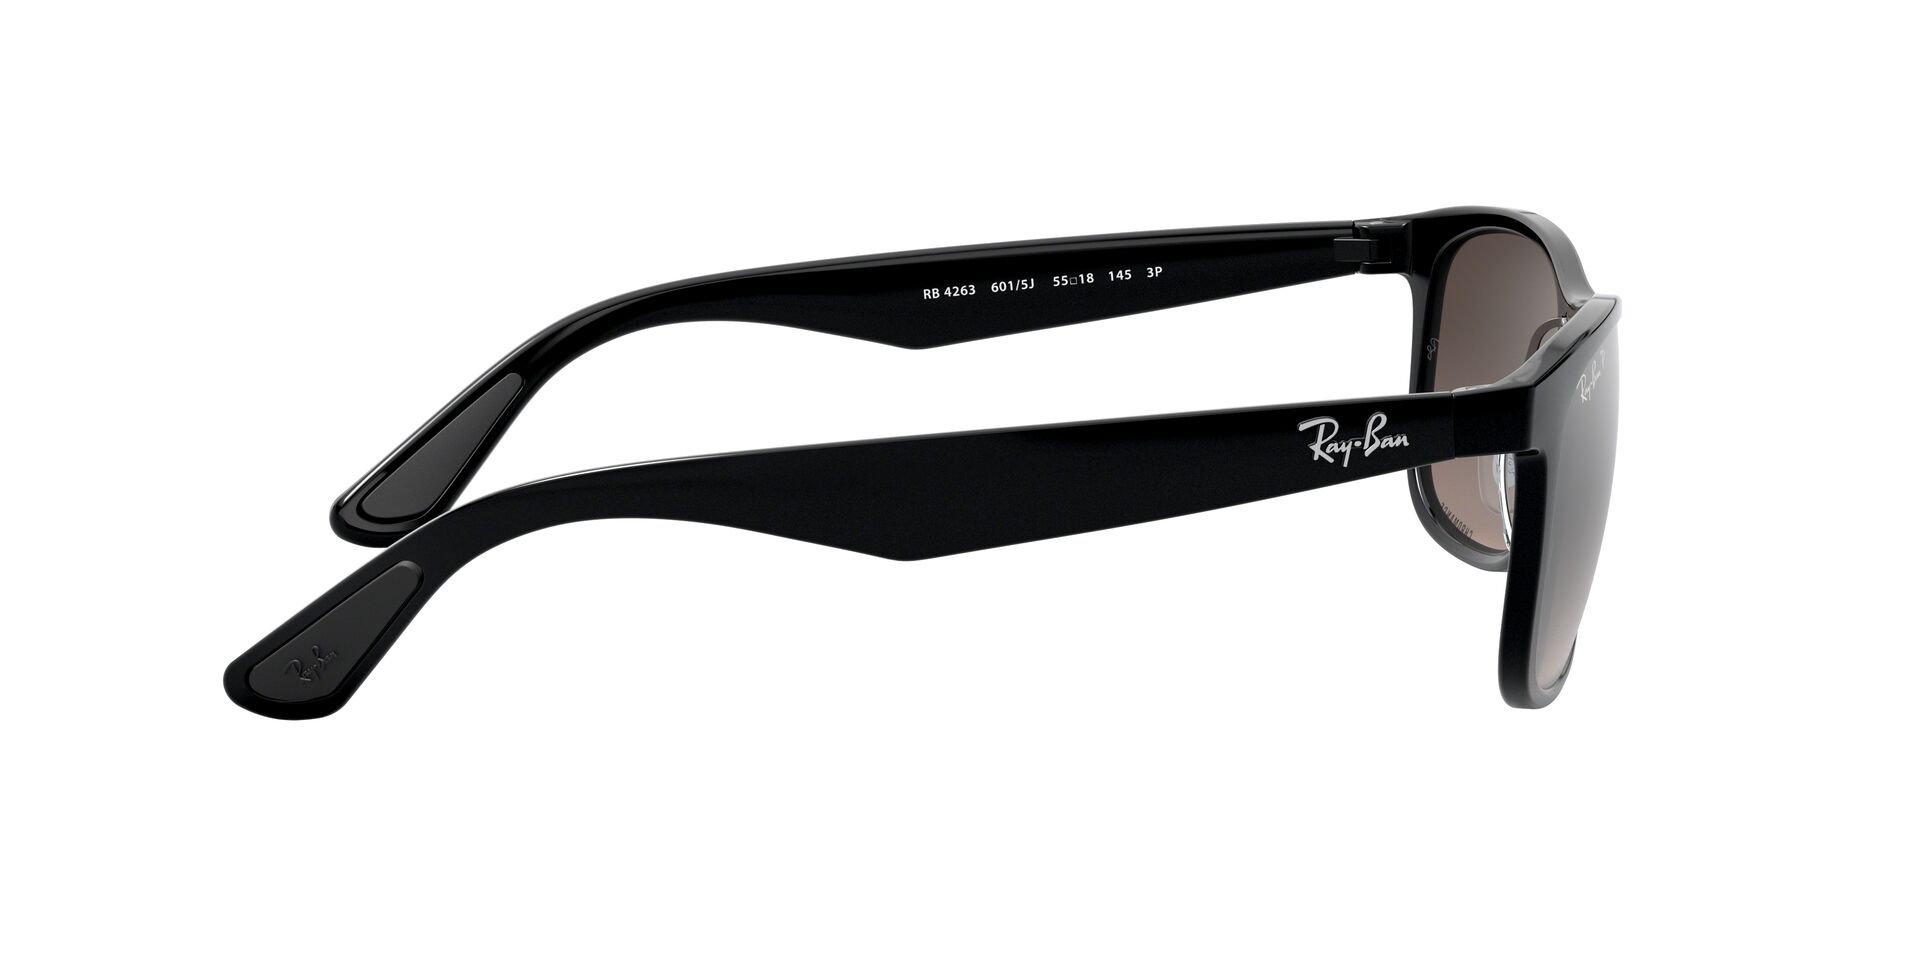 Buy Ray-Ban Rb4263 Chromance Sunglasses Online.